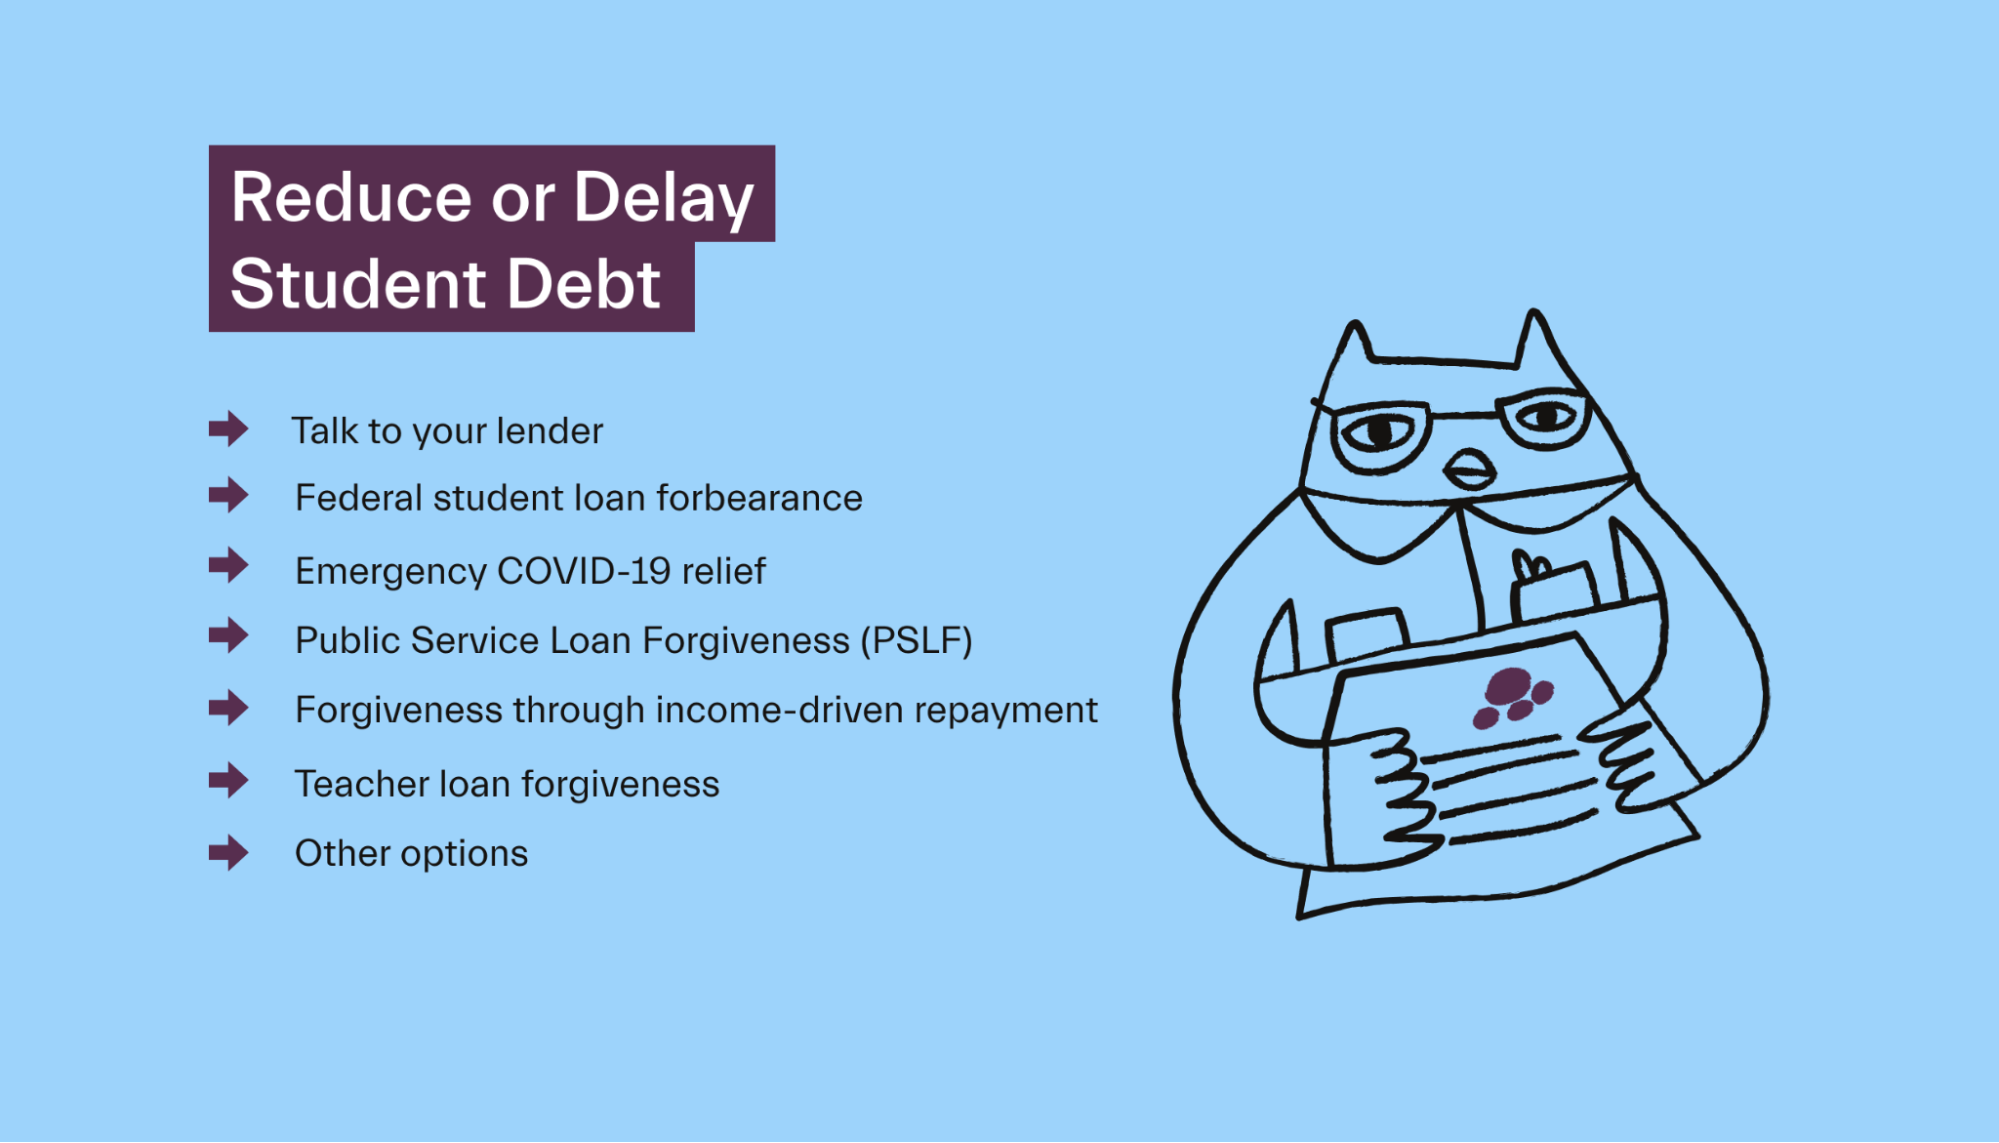 Reduce or Delay Student Debt